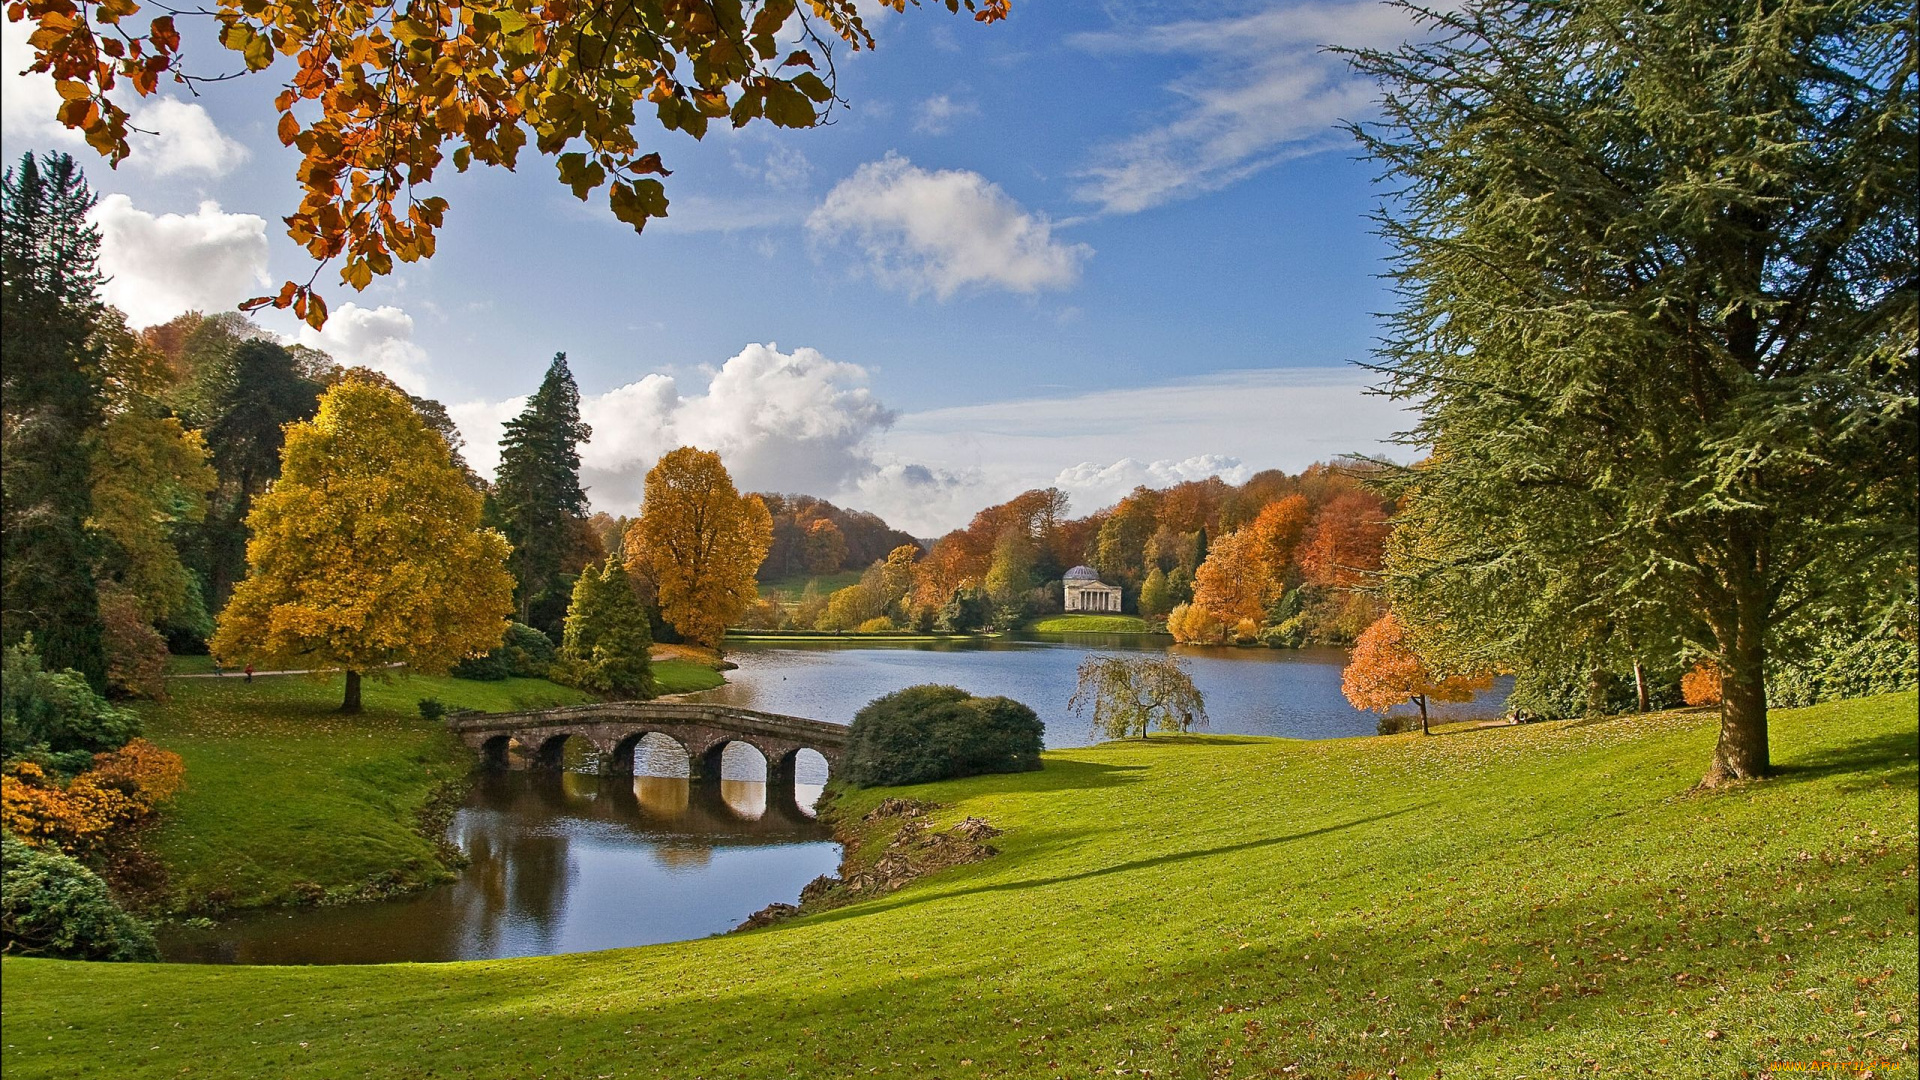 stourhead, garden, wiltshire, england, природа, парк, осень, деревья, уилтшир, англия, пейзаж, мост, озеро